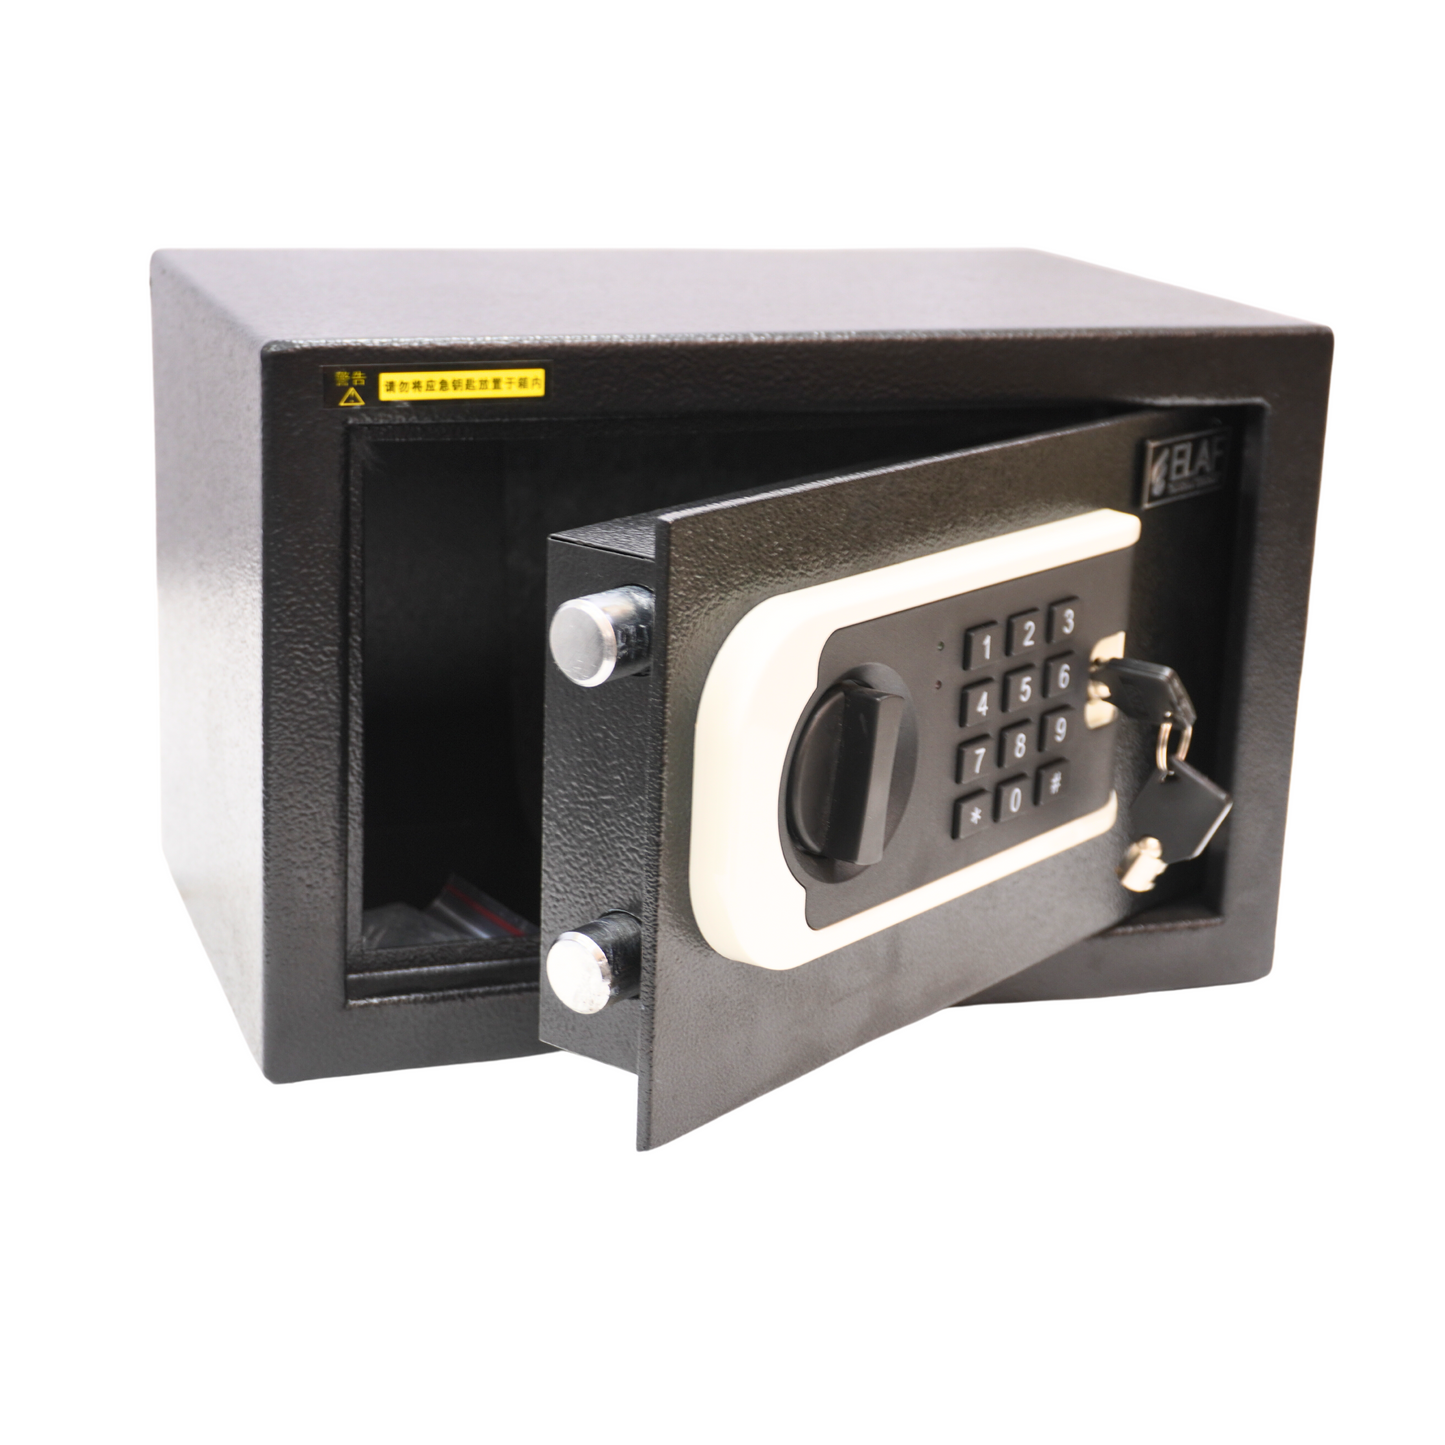 ELAF Digital Safety Locker (FT-20EUD)